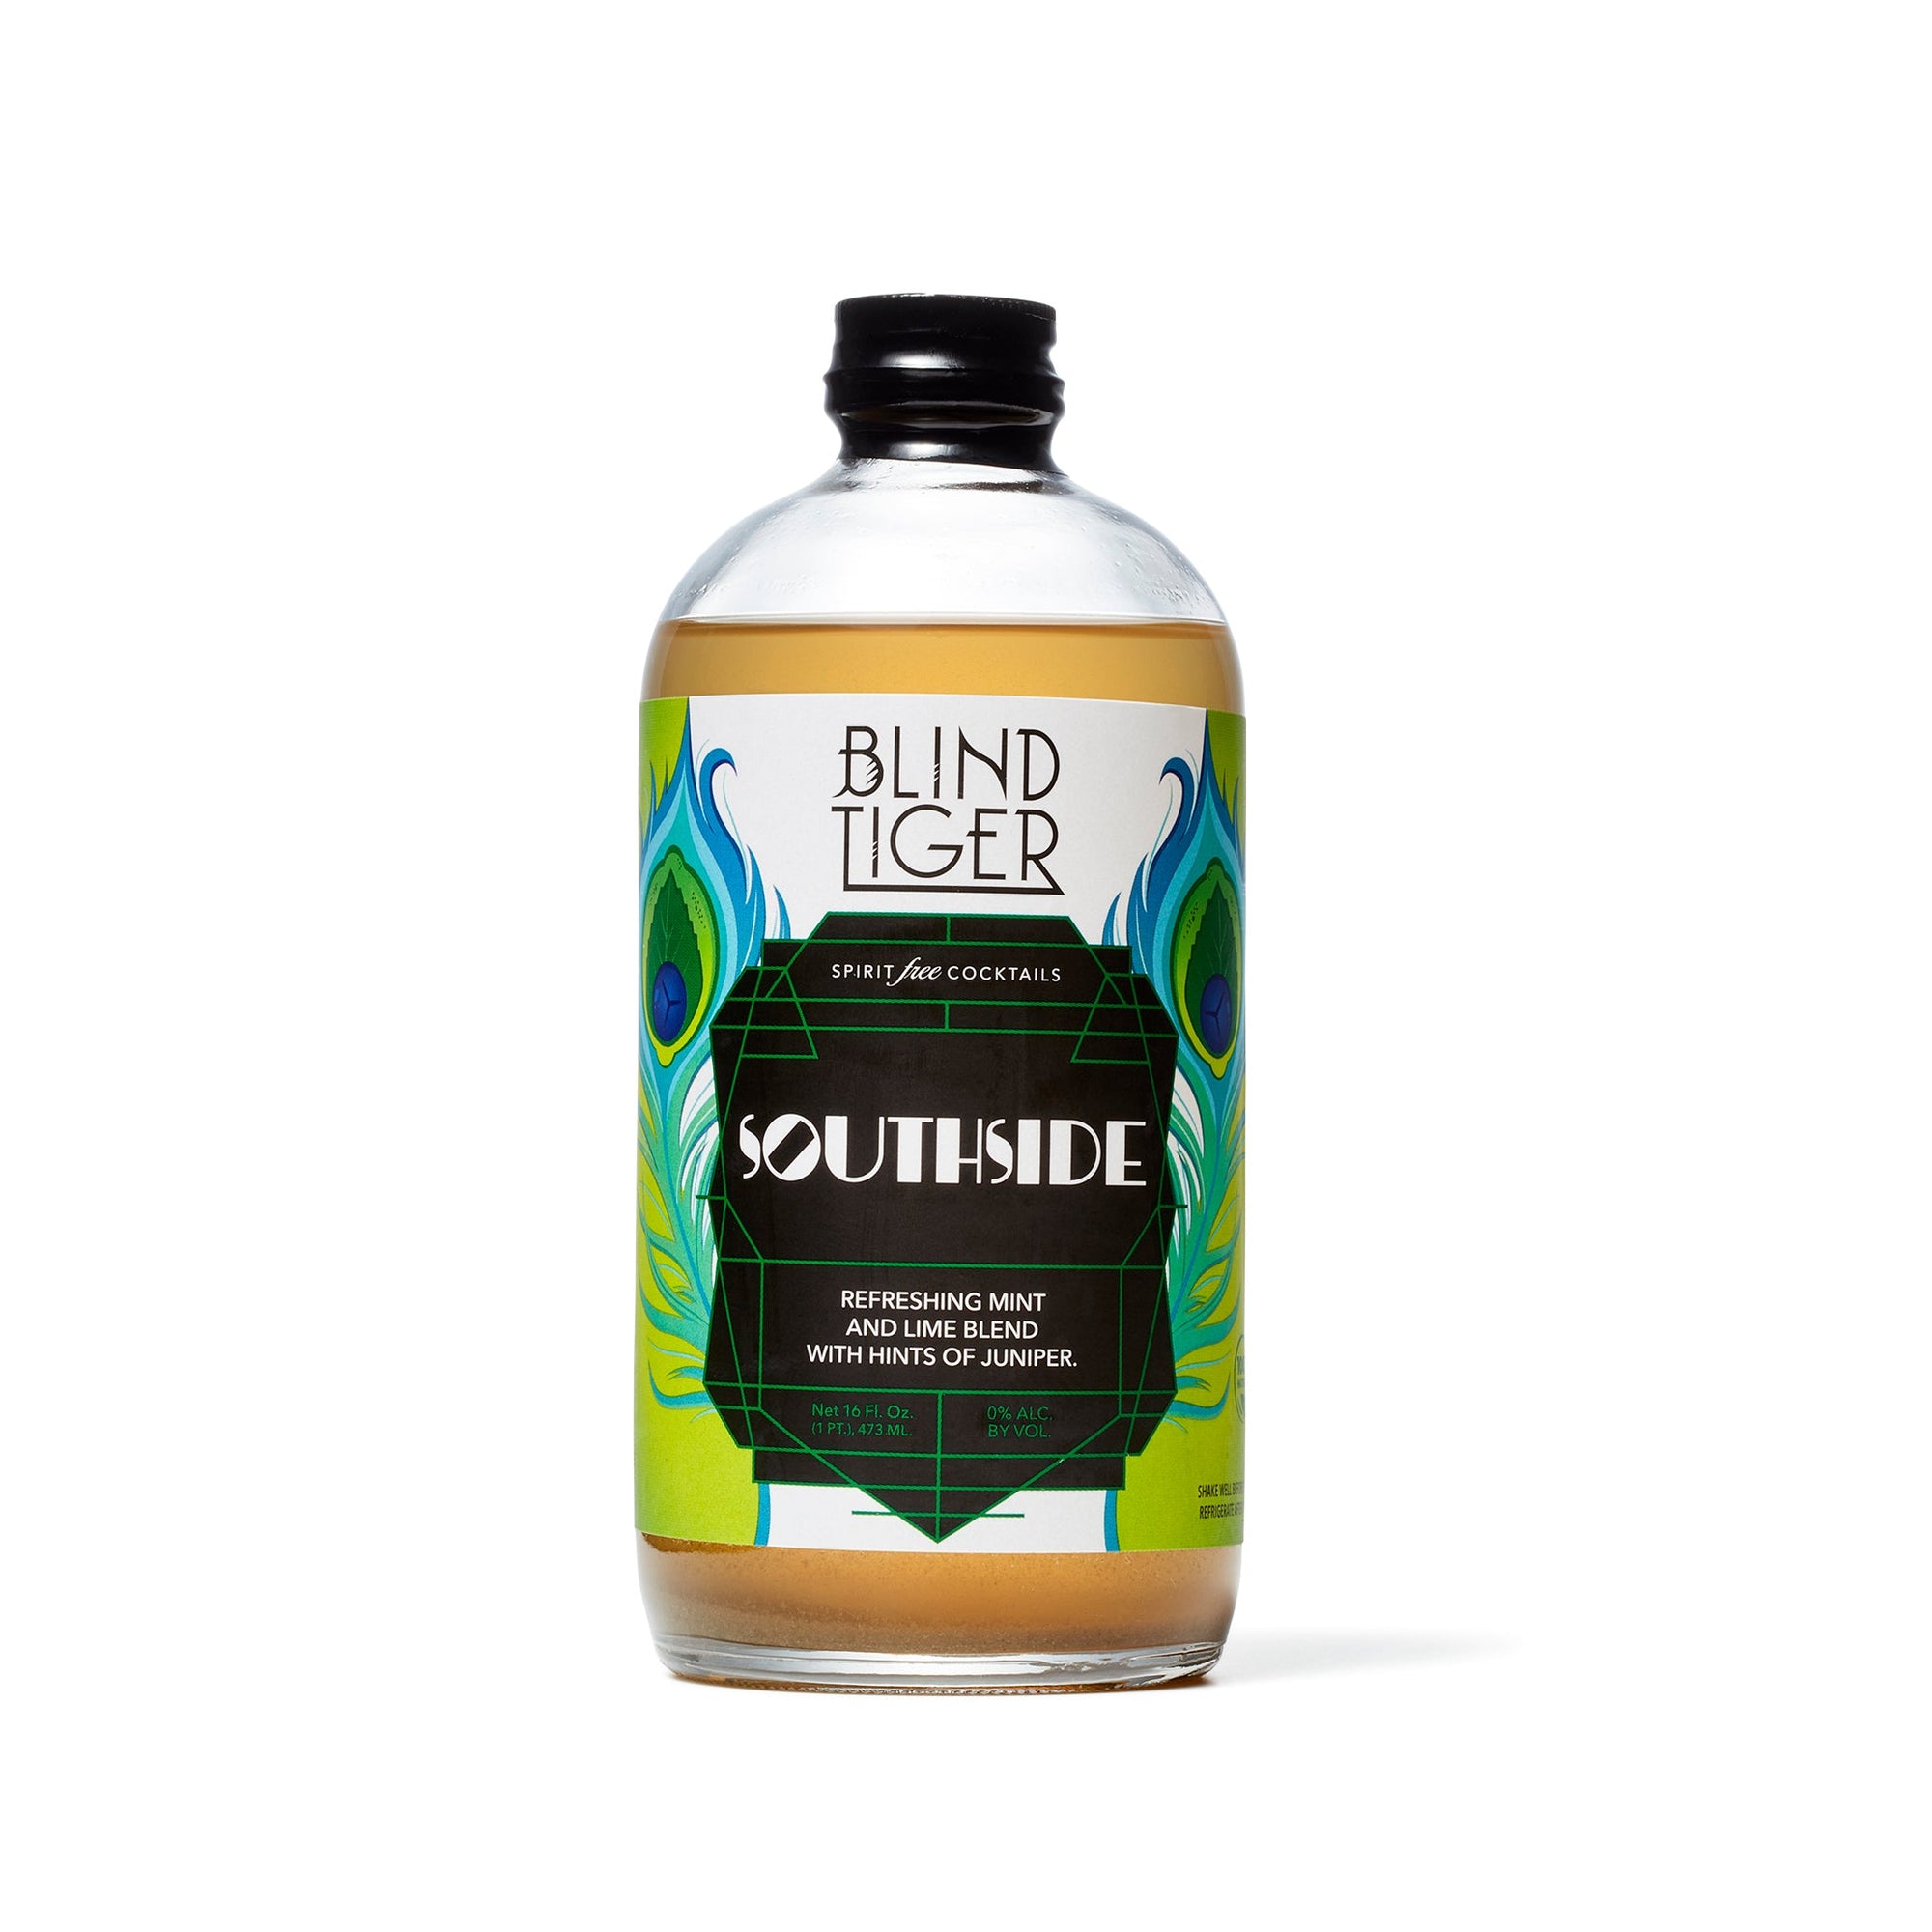 Blind Tiger - Southside Non-Alcoholic Cocktail - 16 oz - Boisson